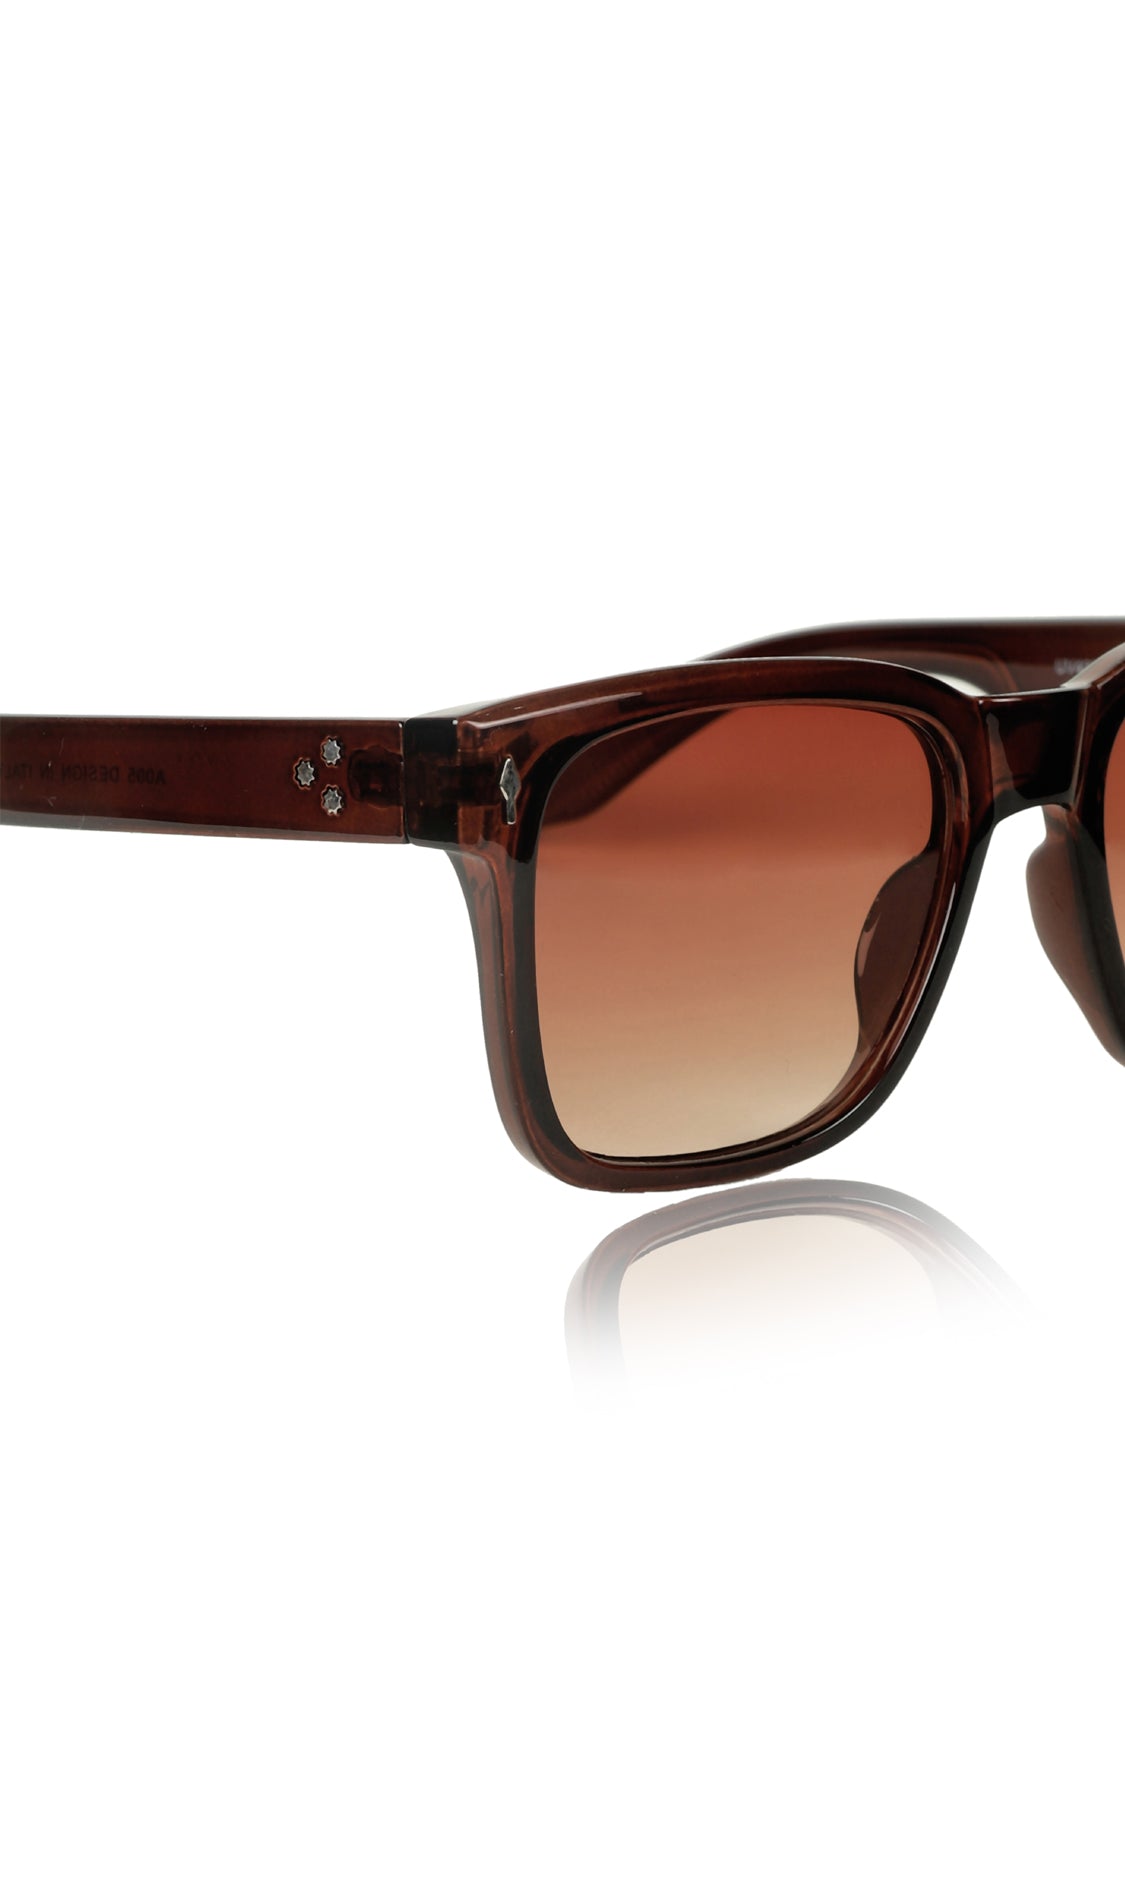 Jodykoes® Premium Series Square UV Protection Sunglasses | Fashionable Sun Shades Comfortable Eyewear Eyeglasses for Men and Women (Brown) - Jodykoes ®